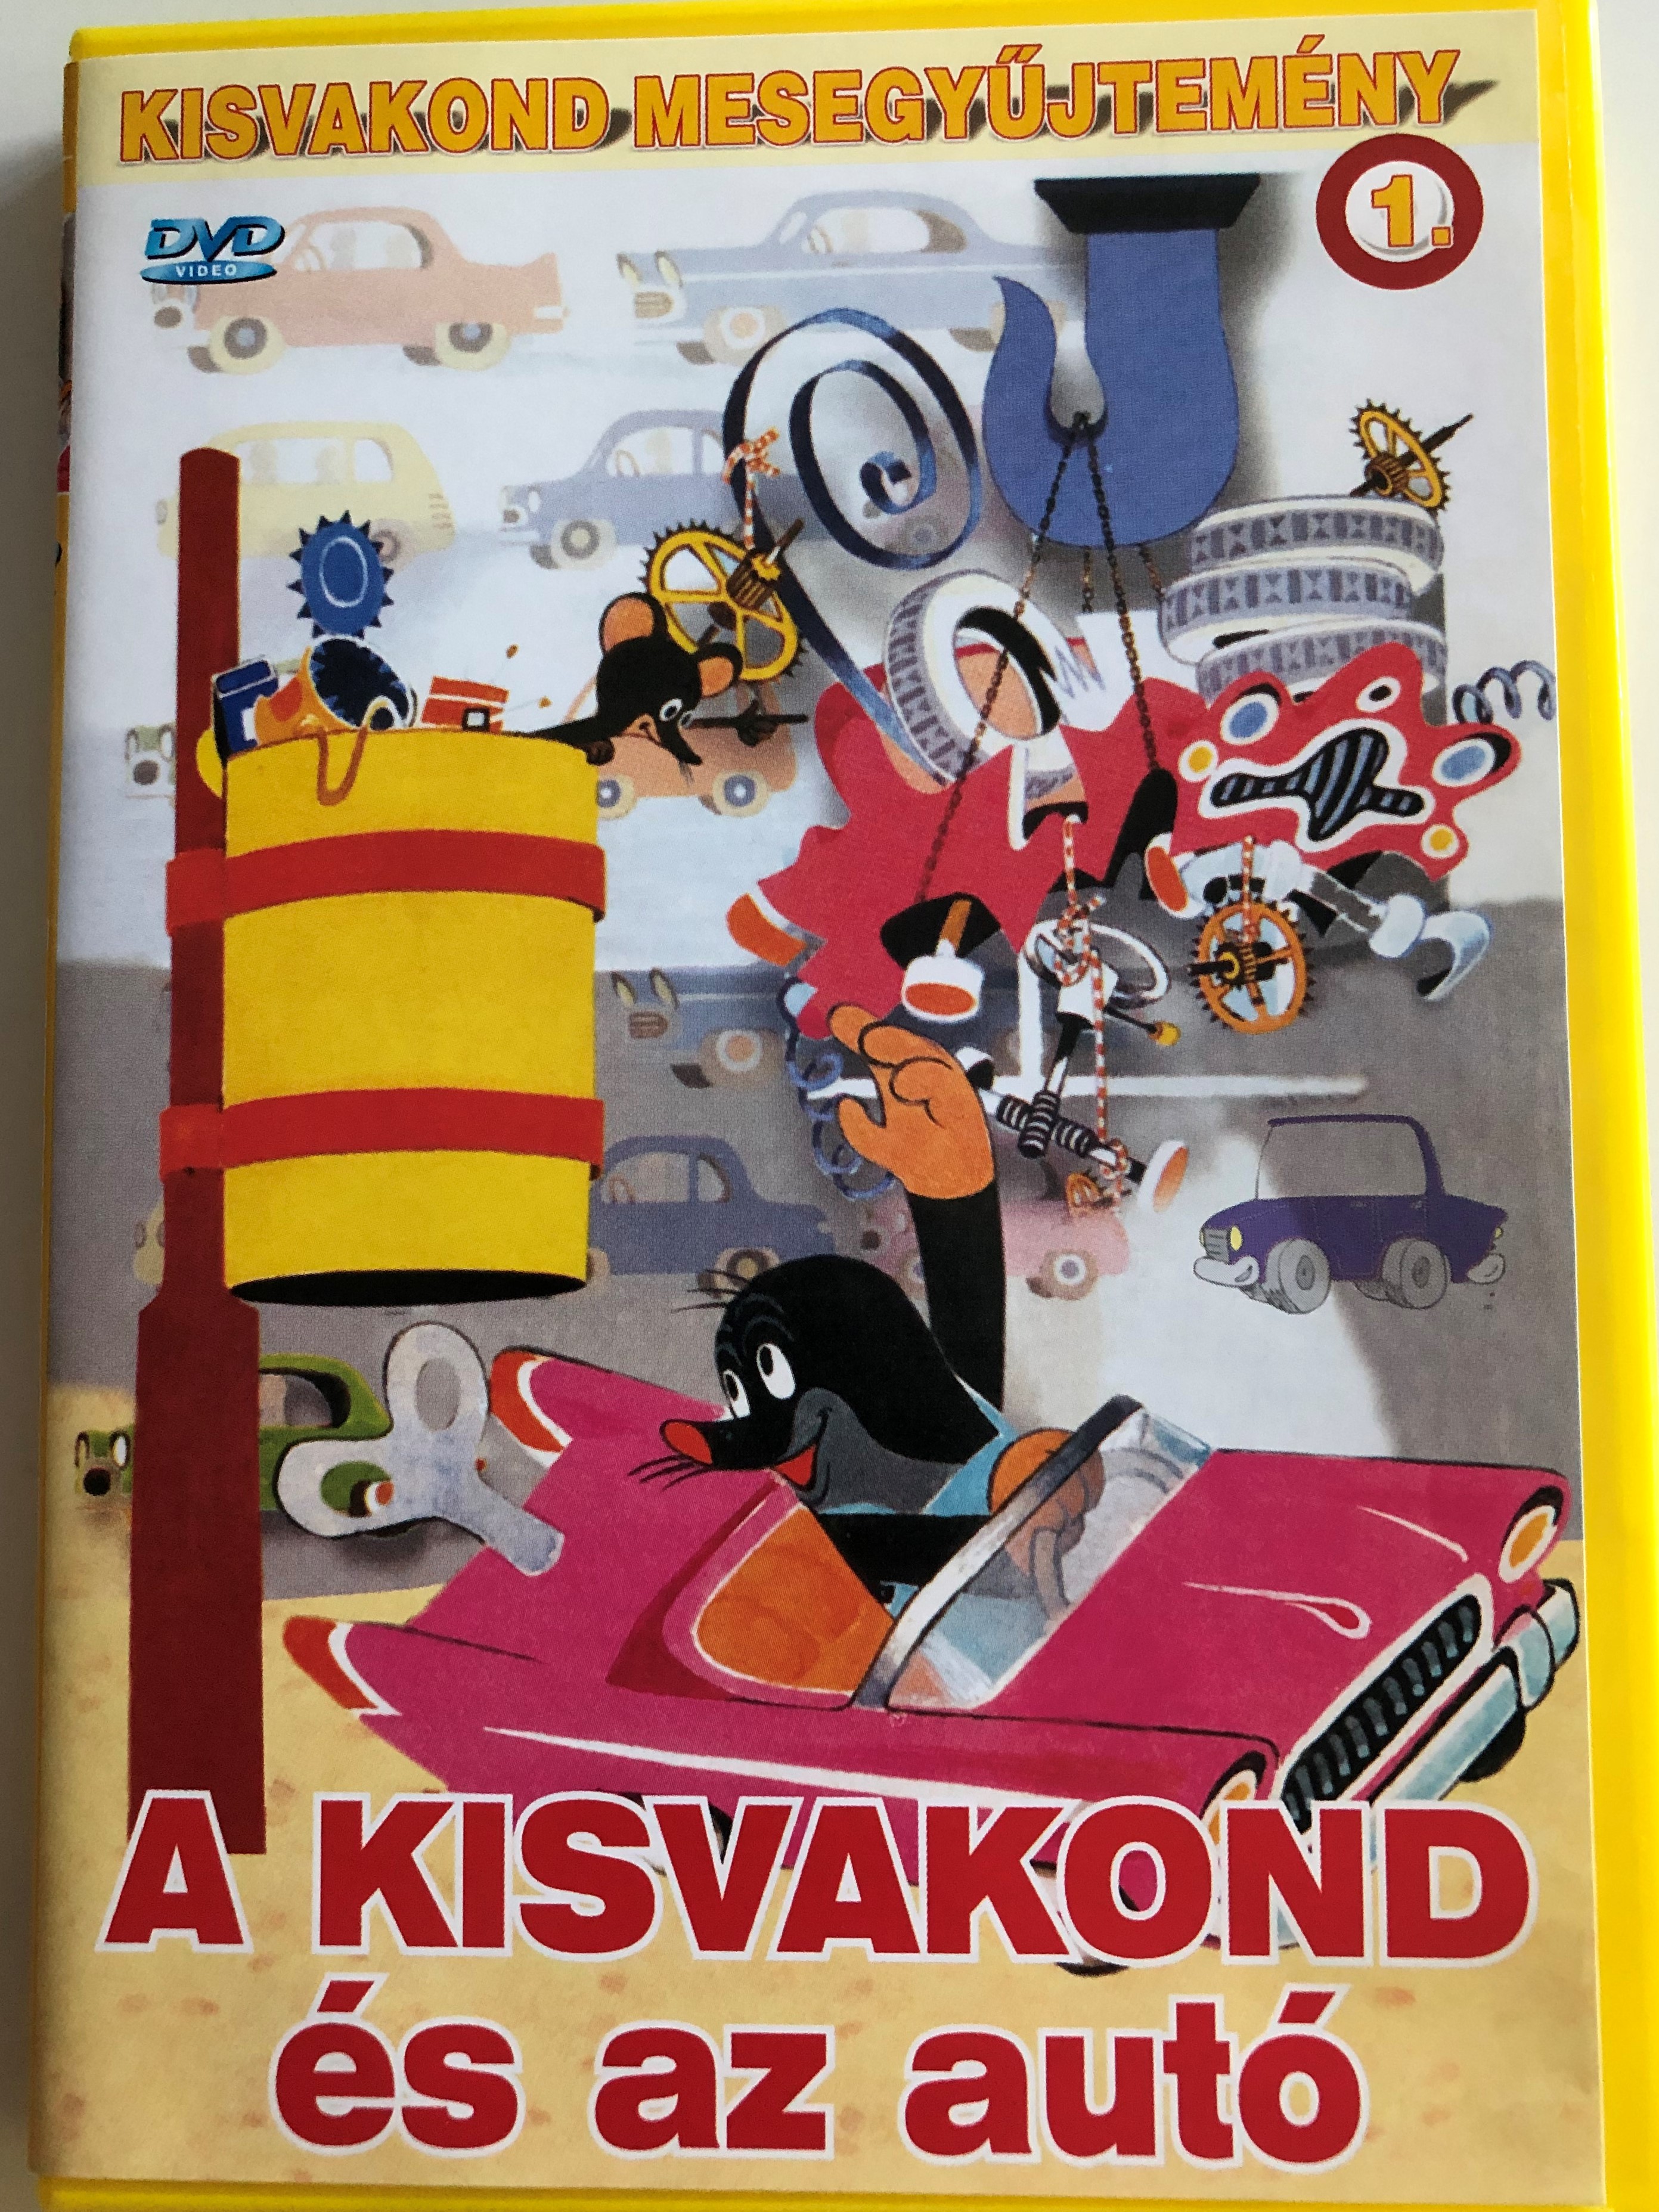 krtek-little-mole-and-the-car-series-1.-dvd-2000-kisvakond-s-az-aut-kisvakond-mesegy-jtem-ny-1.-9-episodes-on-disc-classic-czech-cartoon-created-by-zden-k-miler-1-.jpg